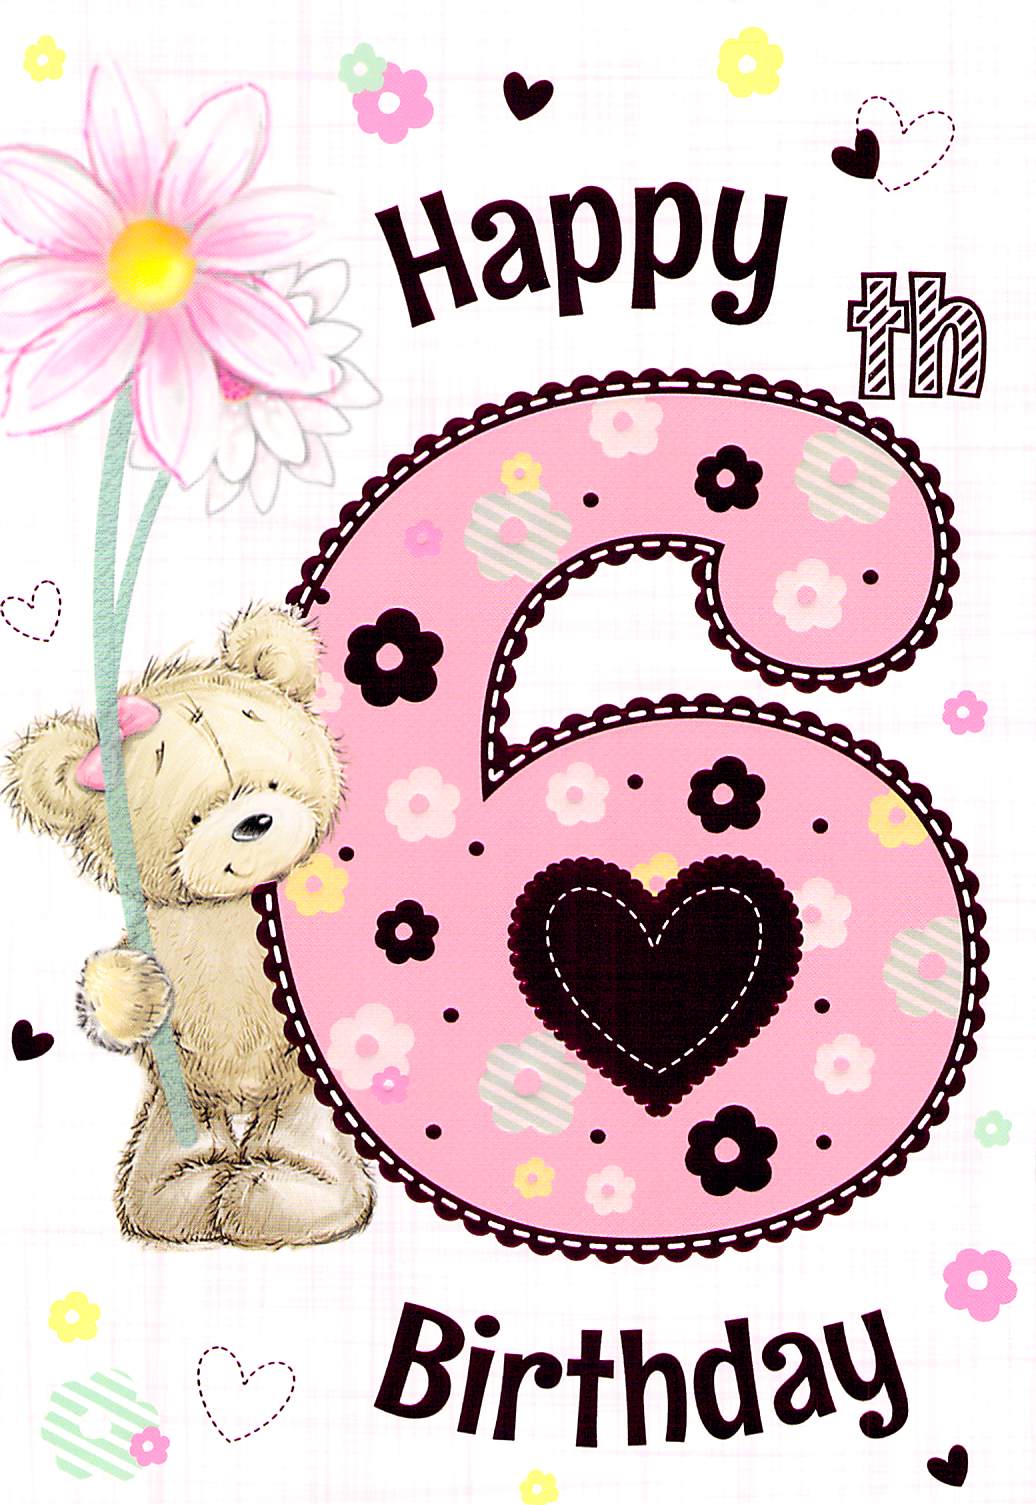 6th Birthday - Age 6 - Greeting Card - Multi Buy Discount - Bear / Heart